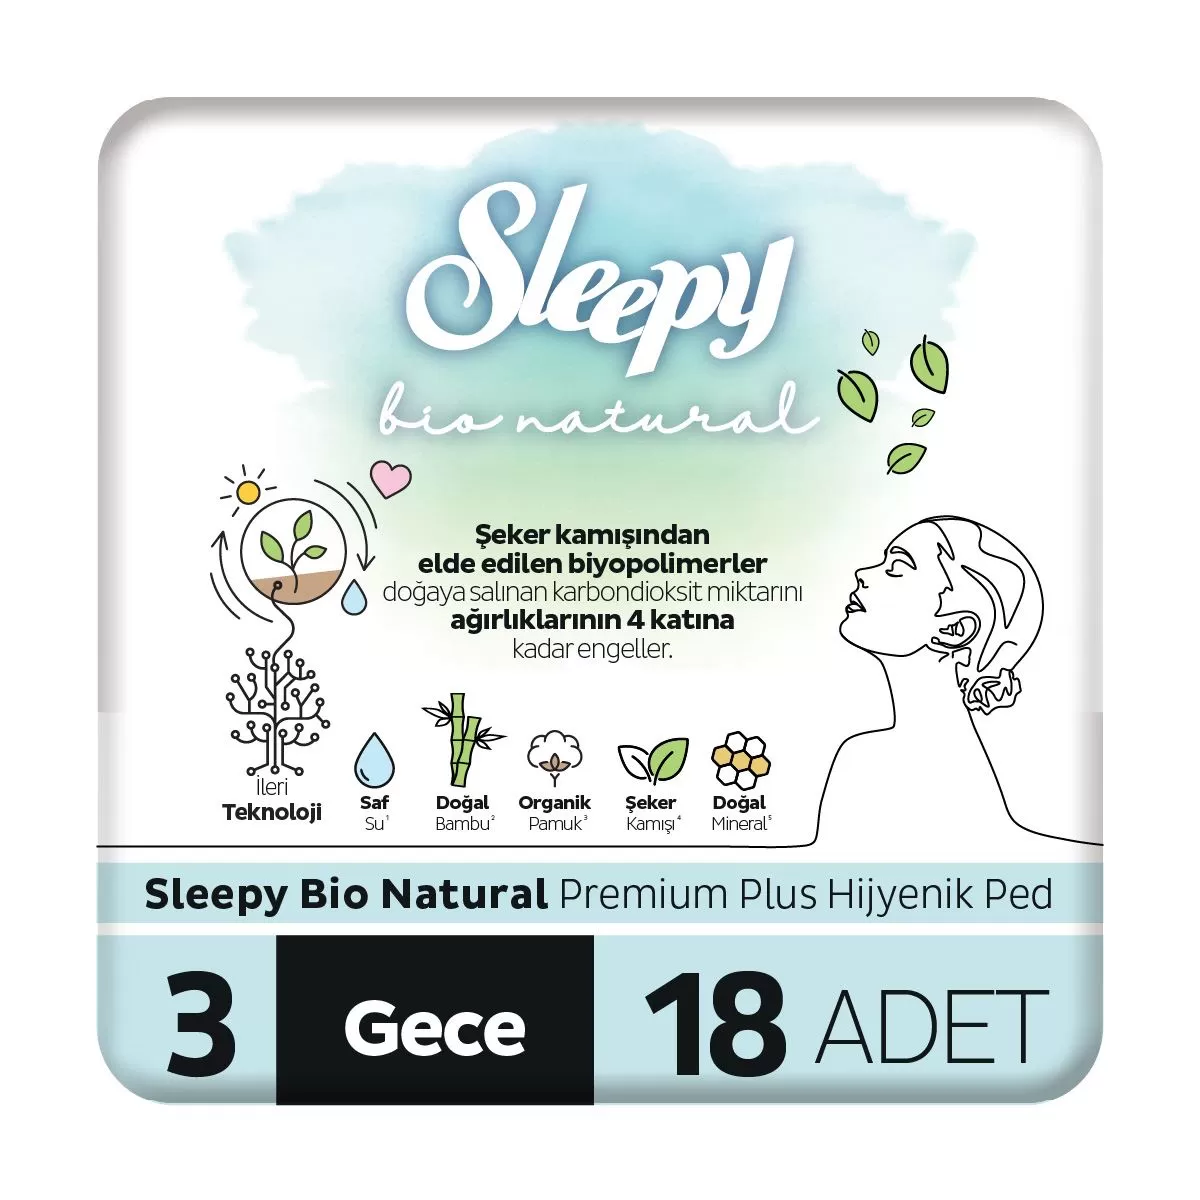 Sleepy Bio Natural Premium Plus Hijyenik Ped Gece 18x5 90 Adet Ped